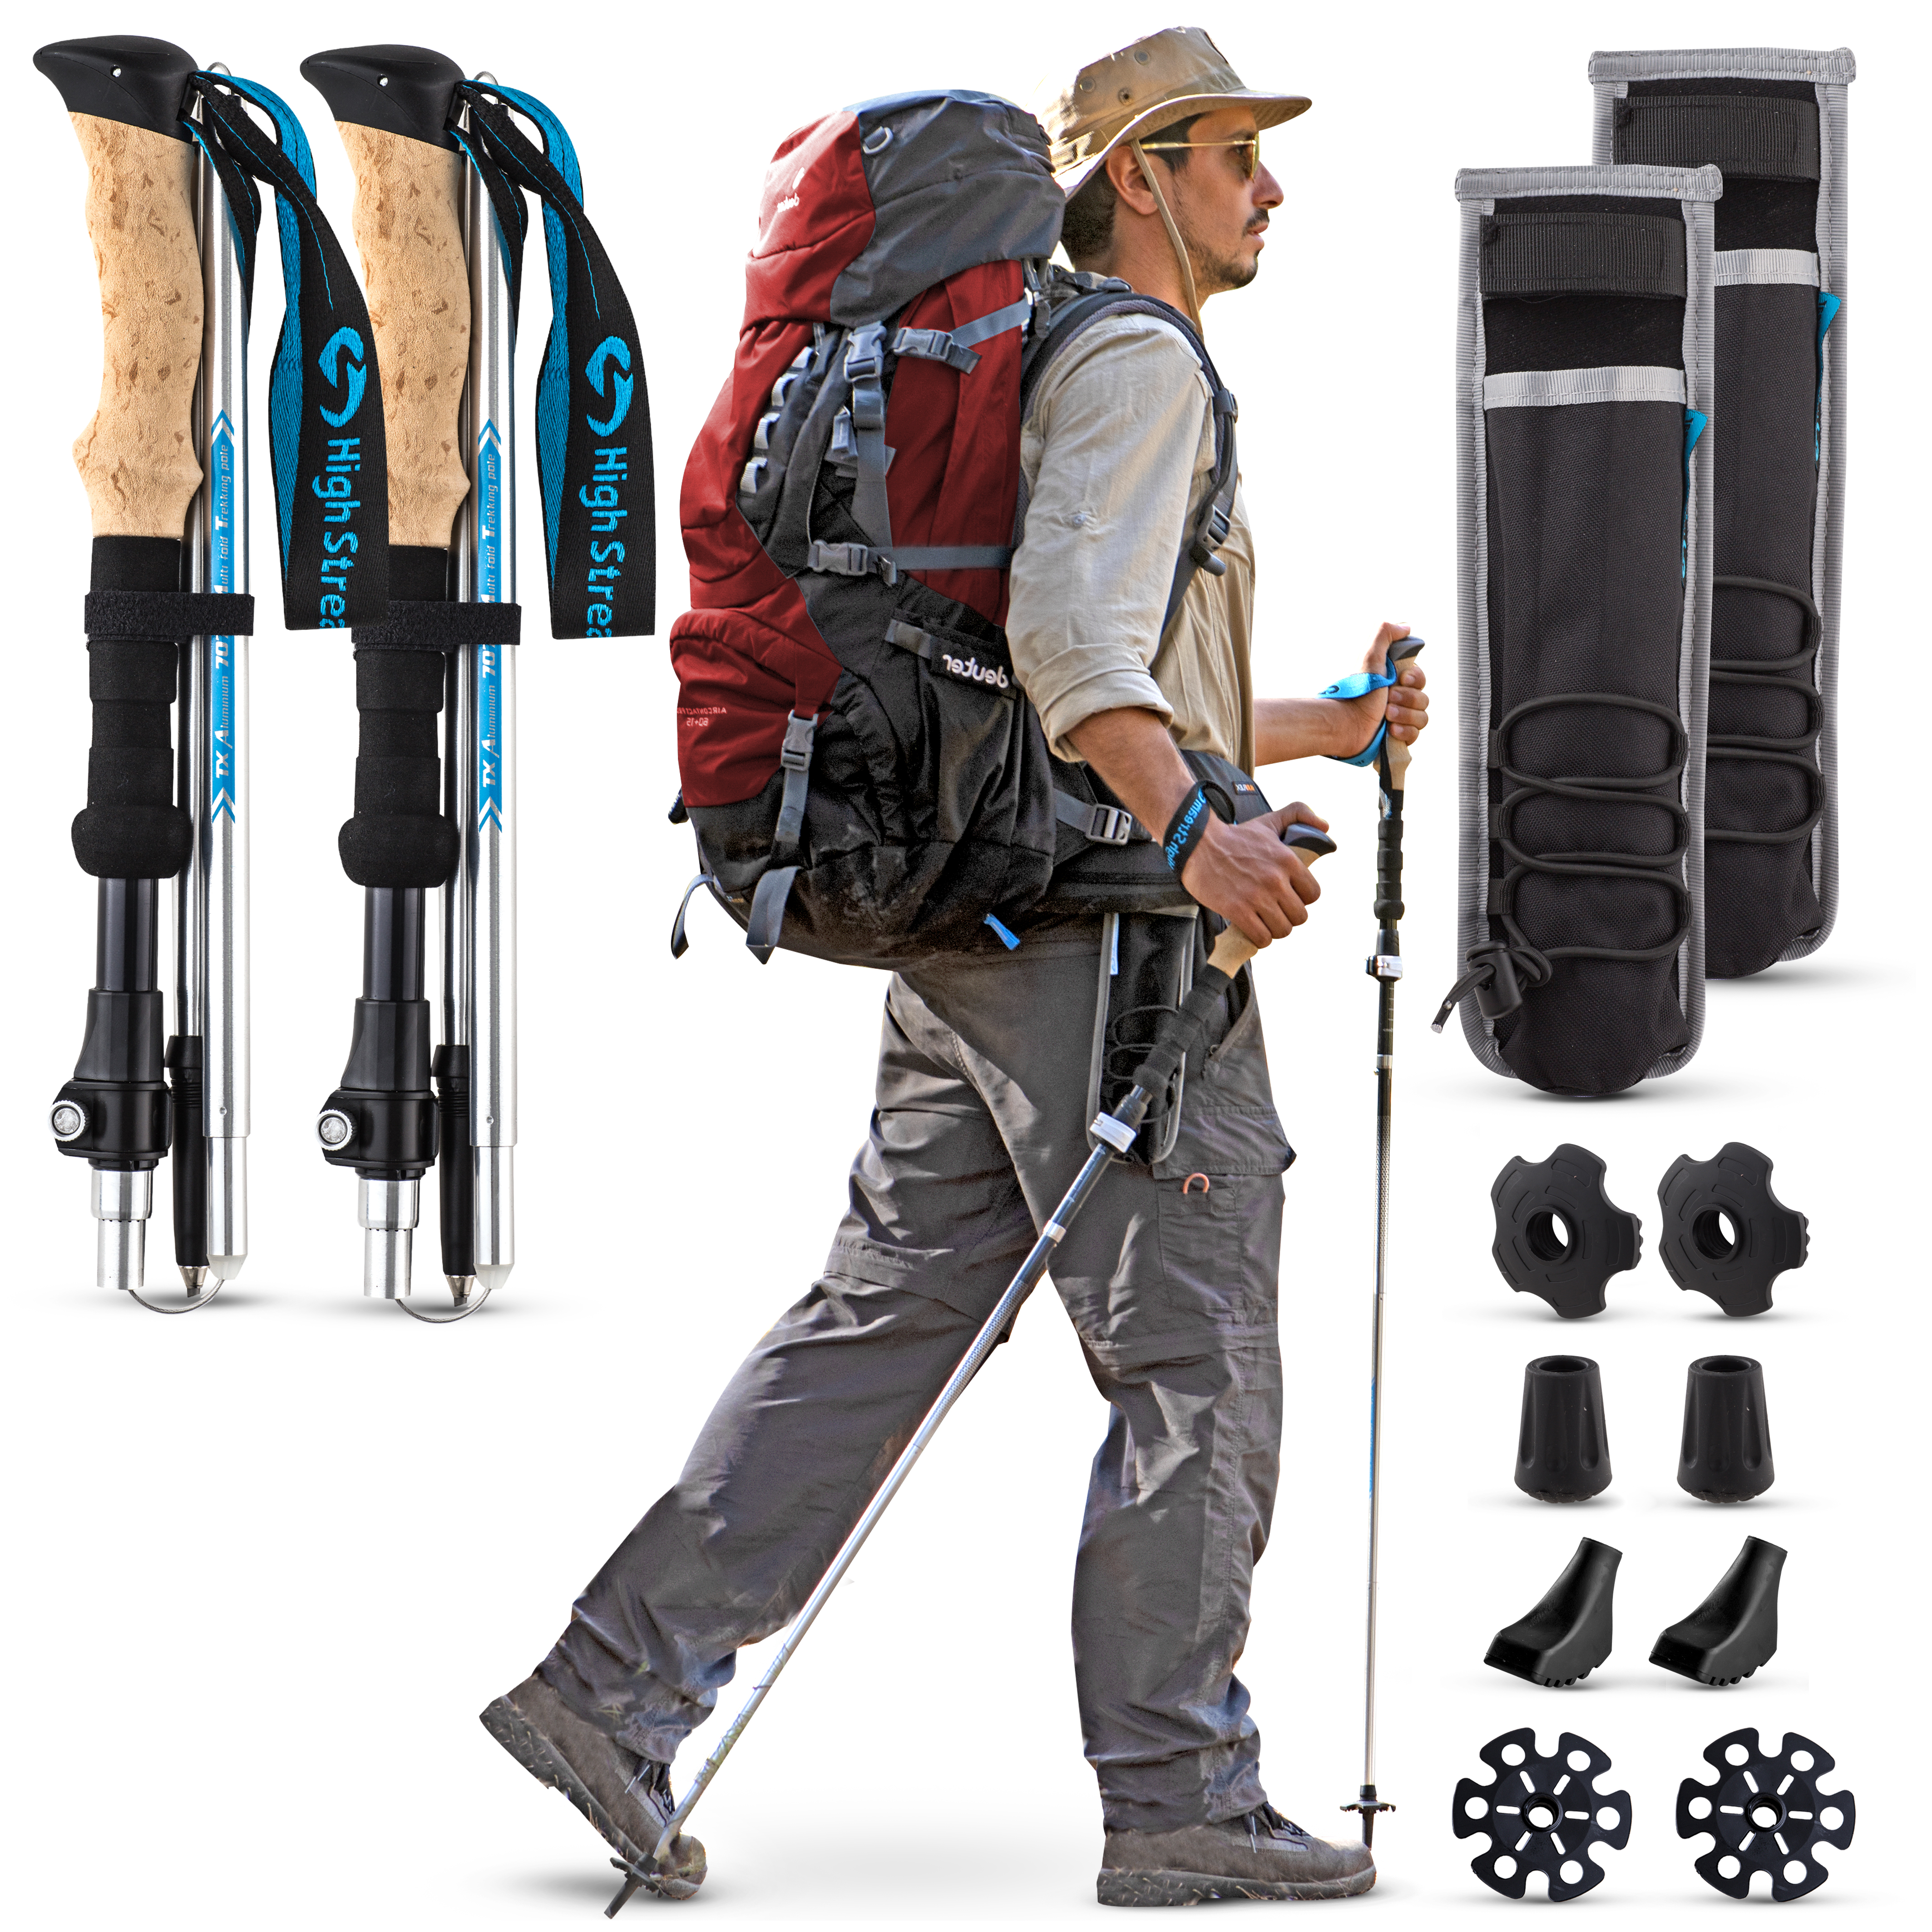  KINGGEAR Walking Stick - Adjustable Hiking Poles, 7075  Aluminum Trekking Poles with Quick Flip Lock, Lightweight Collapsible,  Anti-Sweat Cork Grips, All Terrain（Black） : Sports & Outdoors